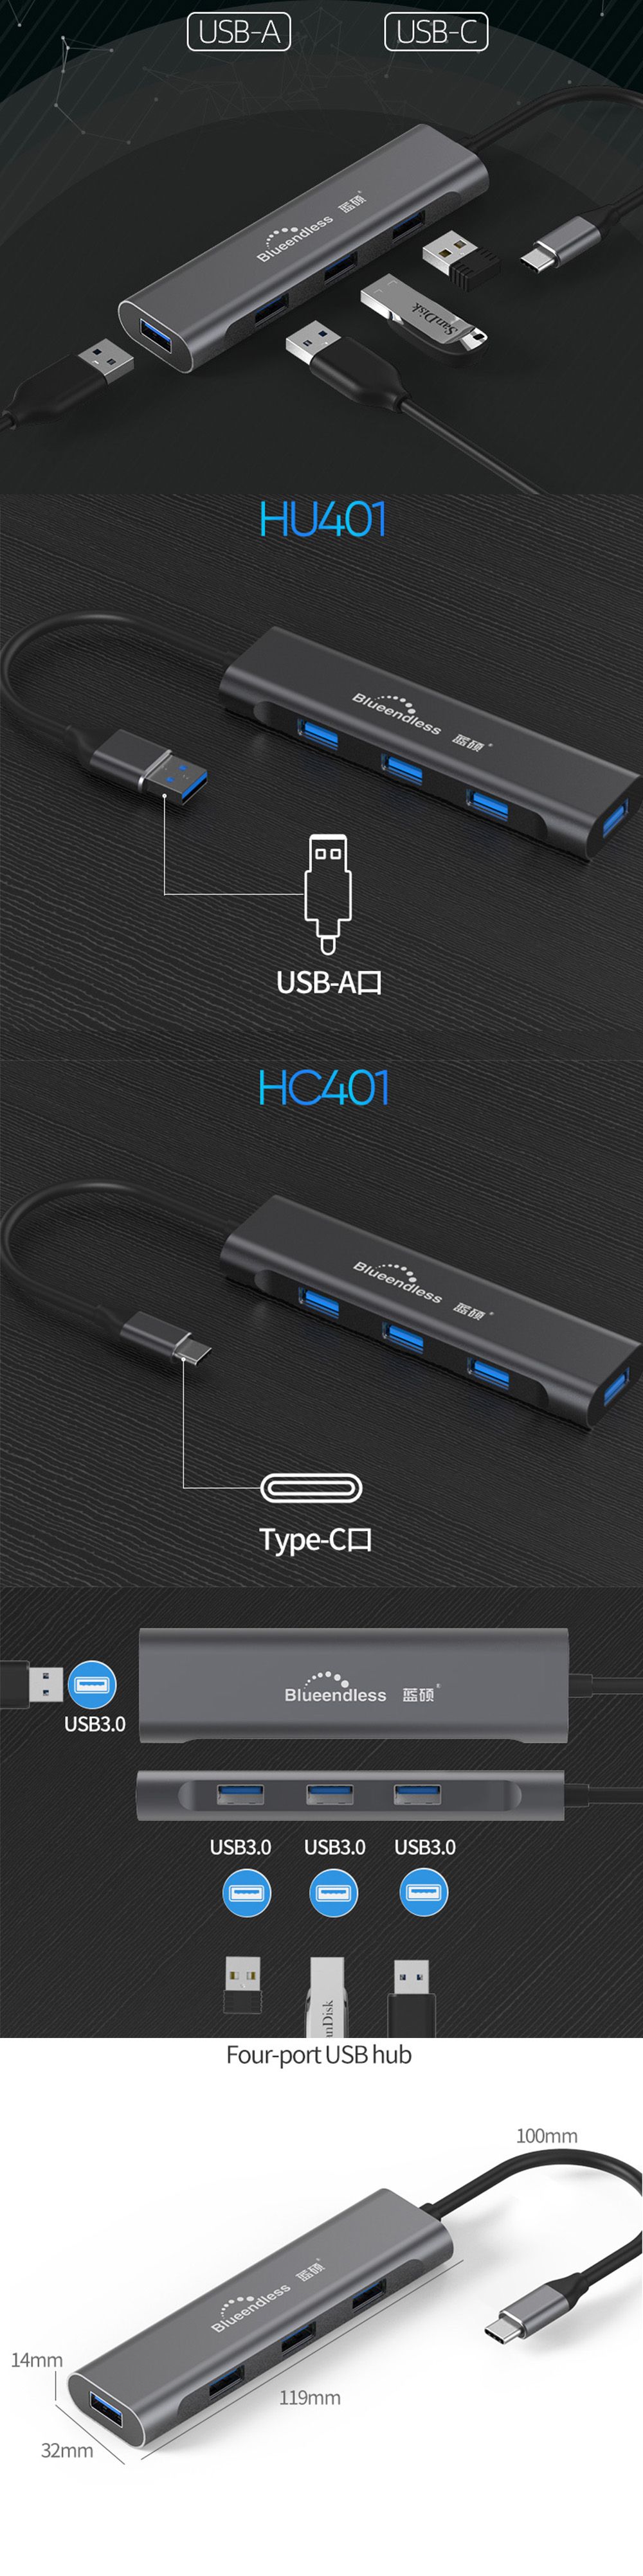 Blueendless-HC401HU401-Type-CType-A-to-USB30-4-in-1-USB-Hub-Adapter-Aluminum-Alloy-Extender-Extensio-1597966